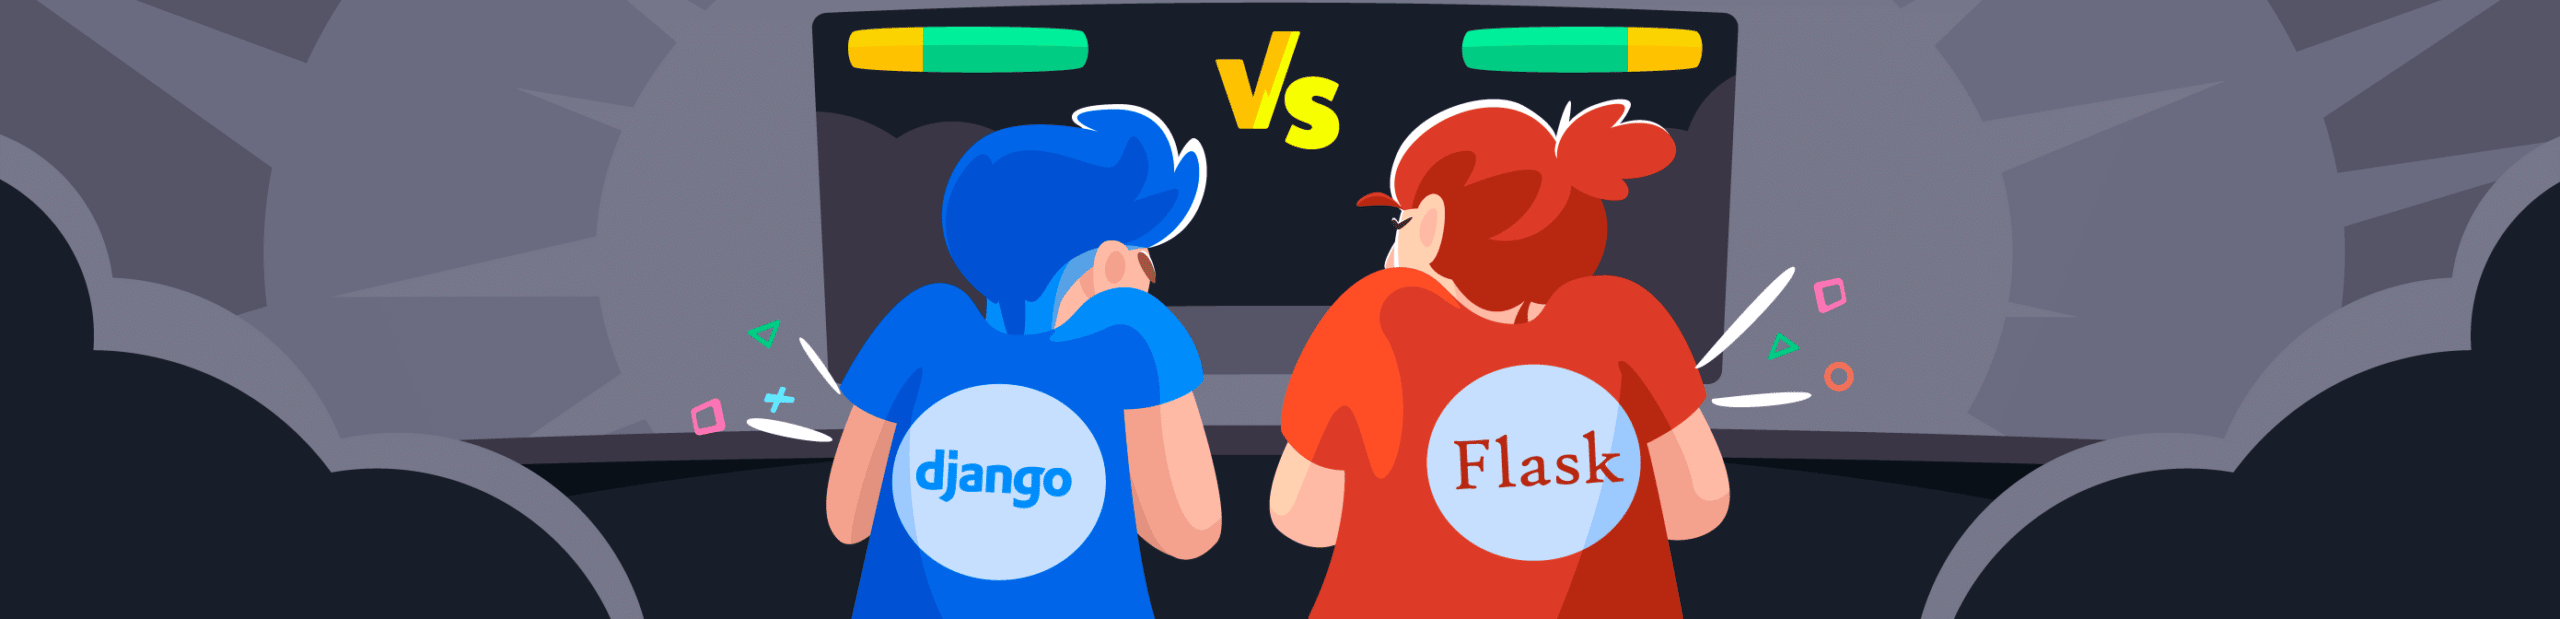 Flask vs Django, which Python framework is best for observability and debugging?